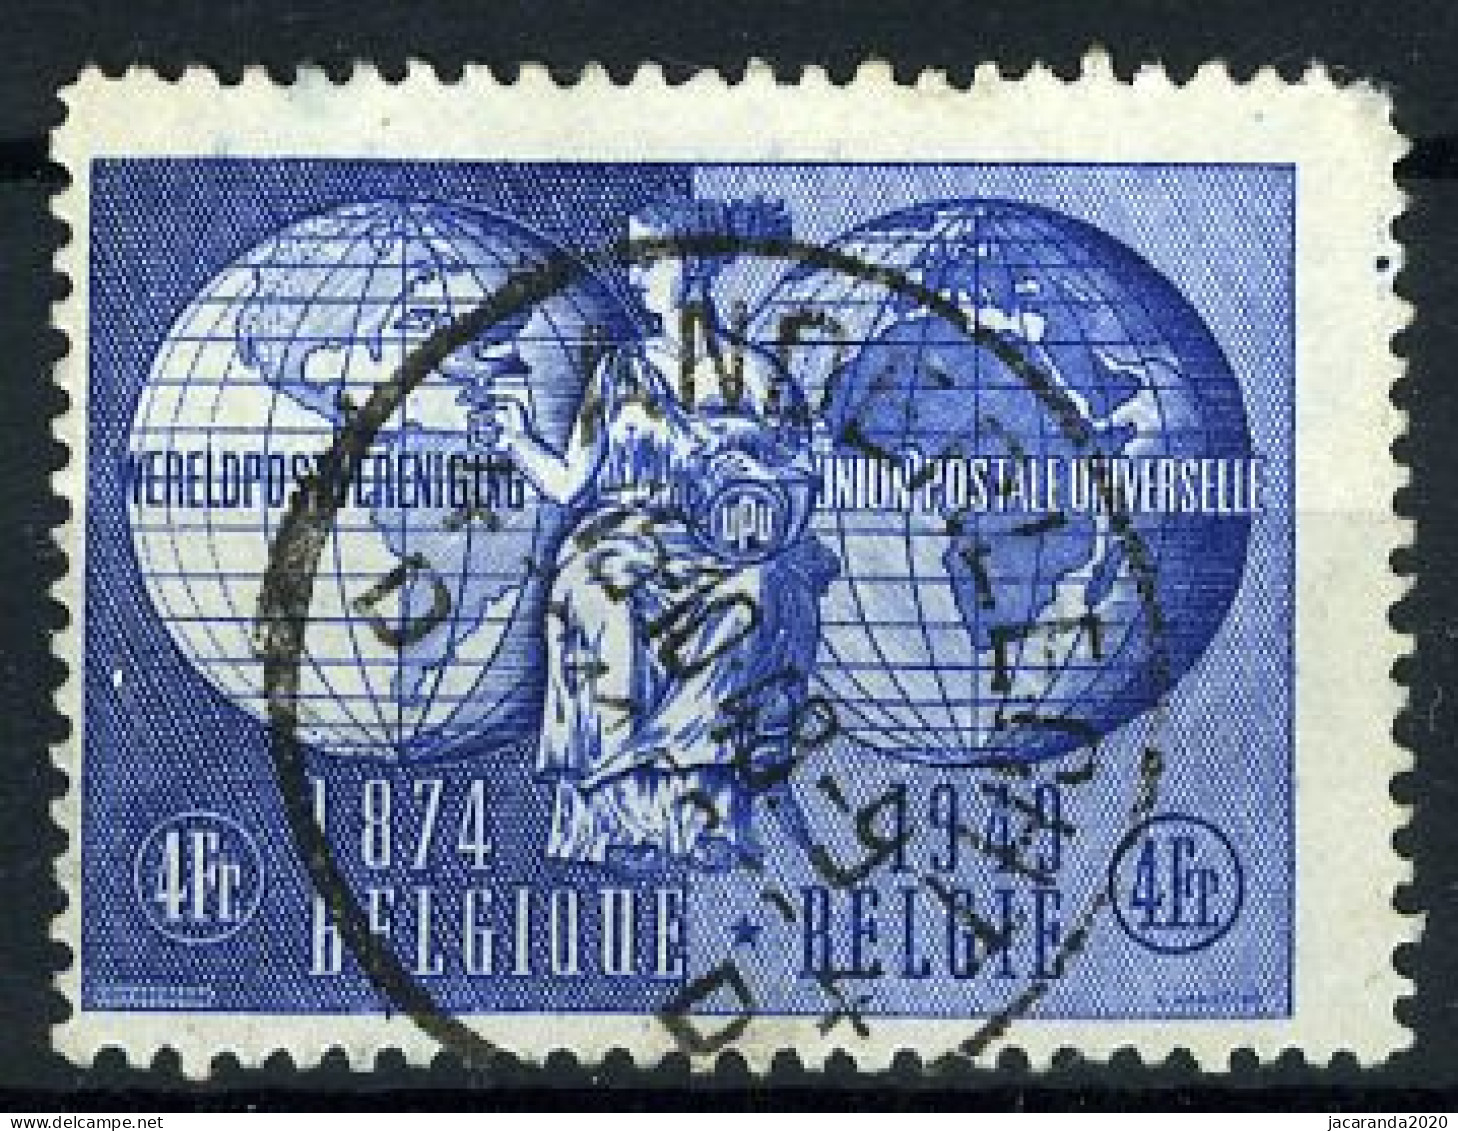 België 812 - 75 Jaar Wereldpostunie - U.P.U. - 75 Ans De L'Union Postale Universelle - Gestempeld - Oblitéré - Used - Usados